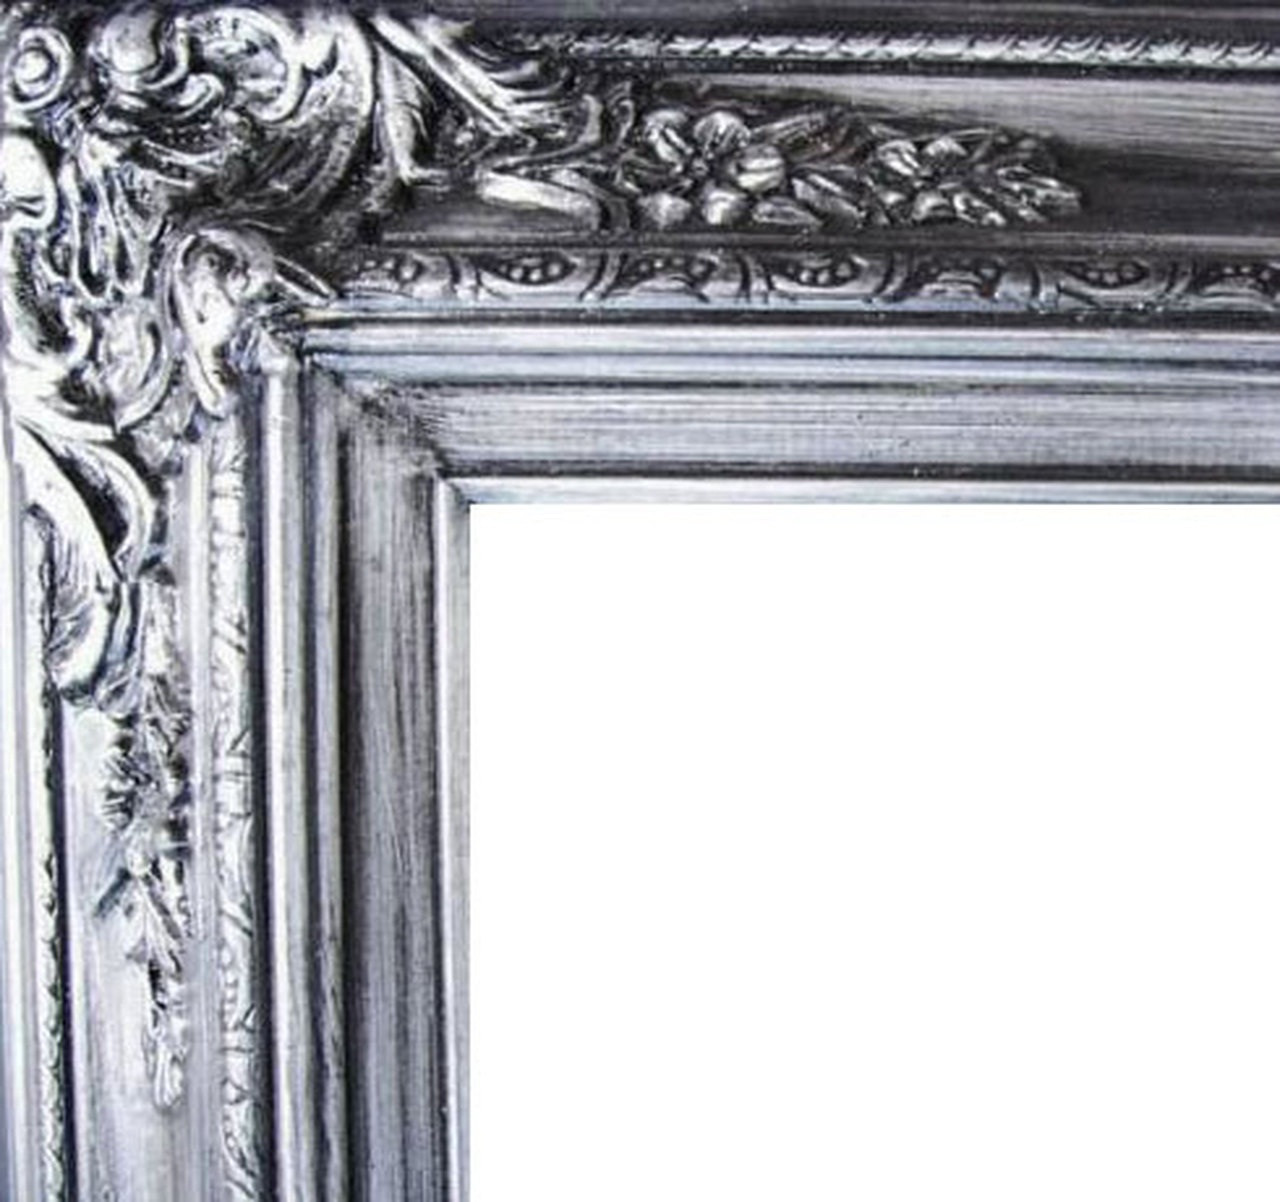 4" Ornate Wood Frames: 27X27